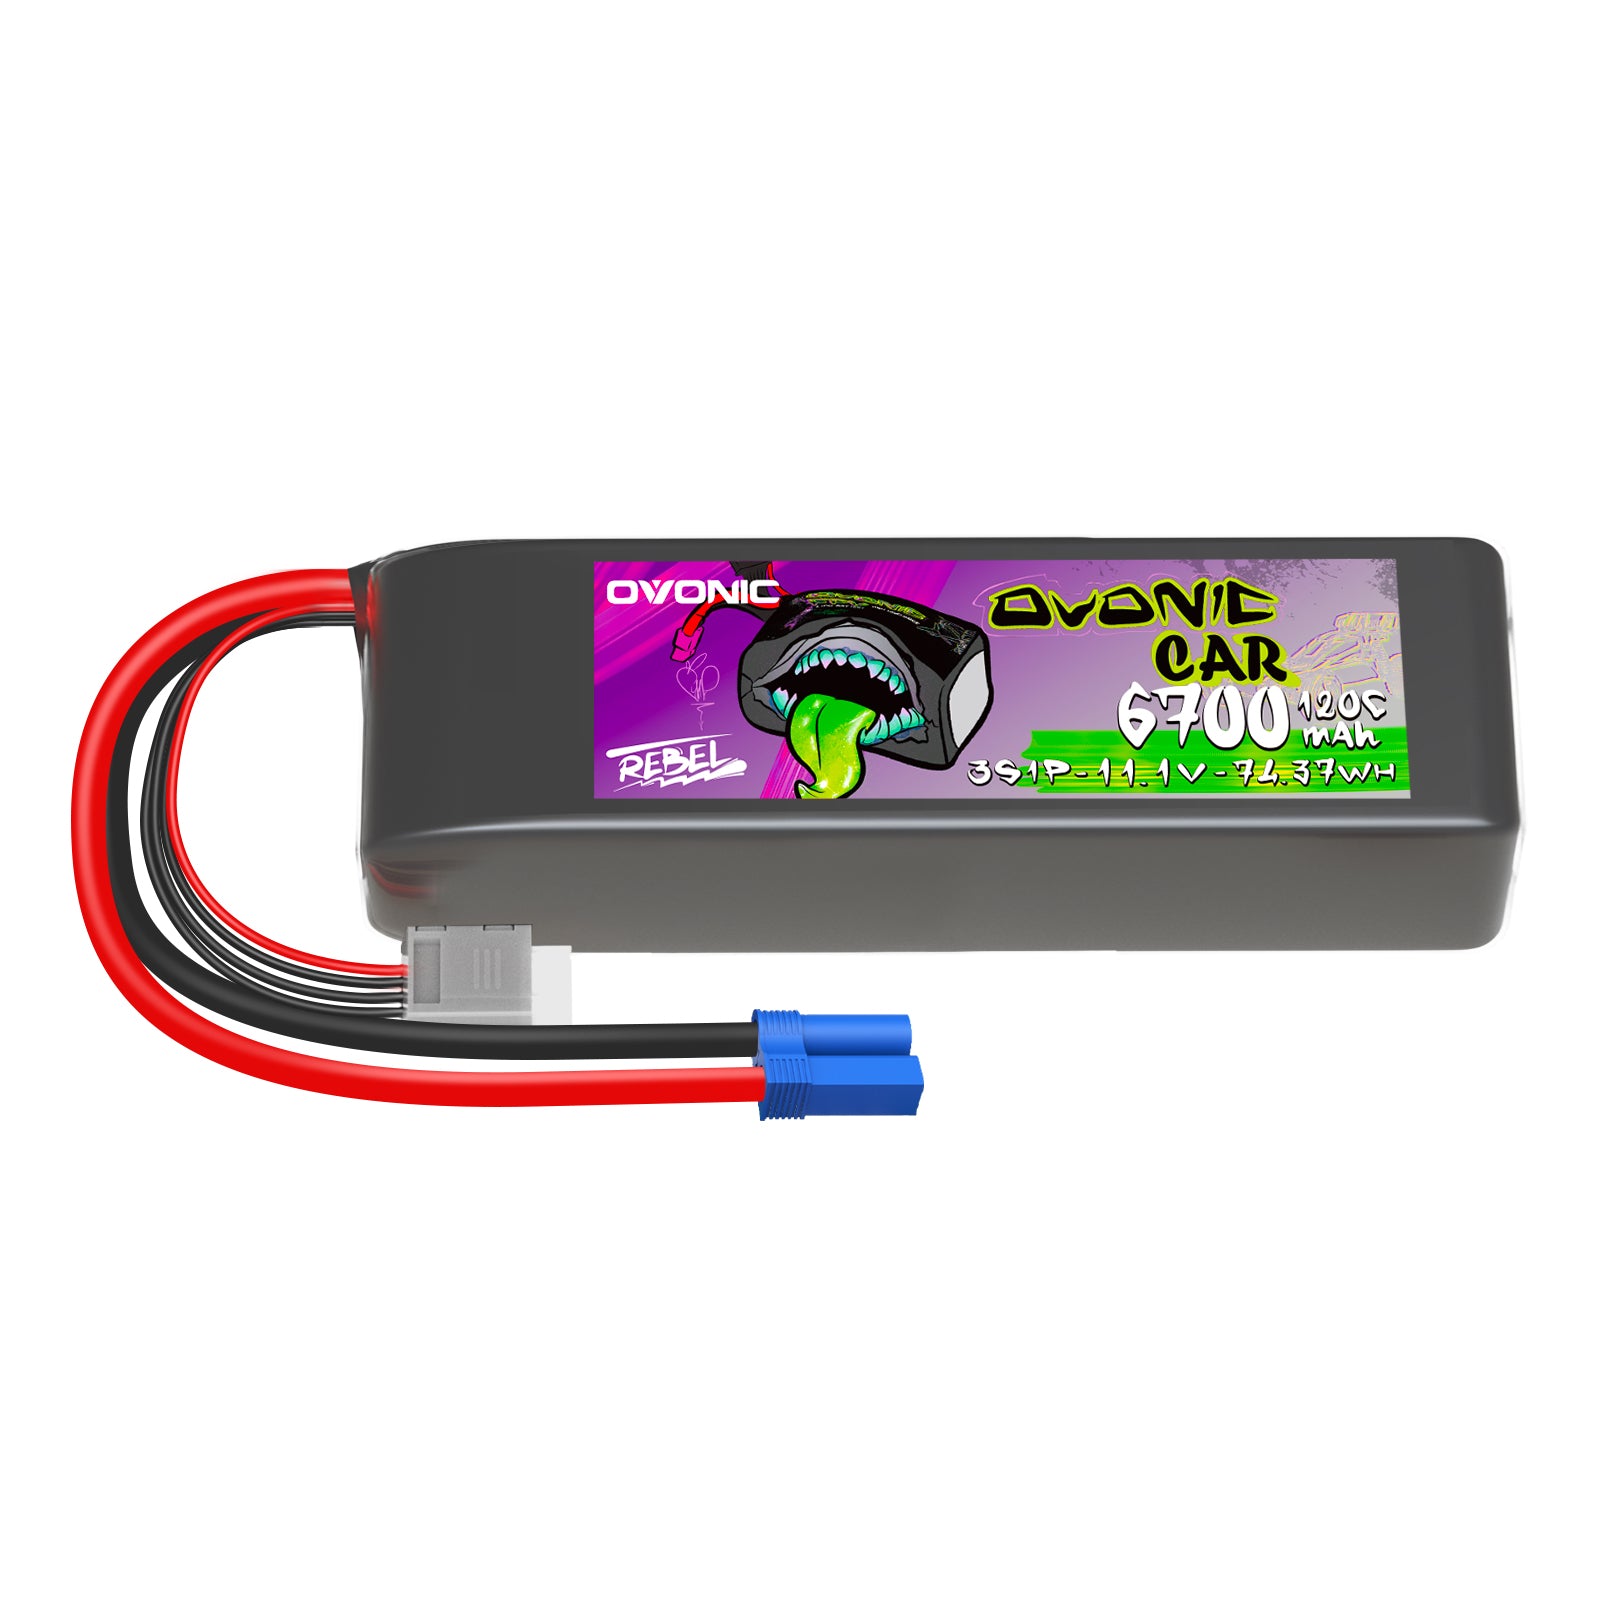 Ovonic Rebel 2.0 120C 3S 6700mAh 11.1V LiPo Battery with EC5 Plug for 1/8 1/10 RC Car